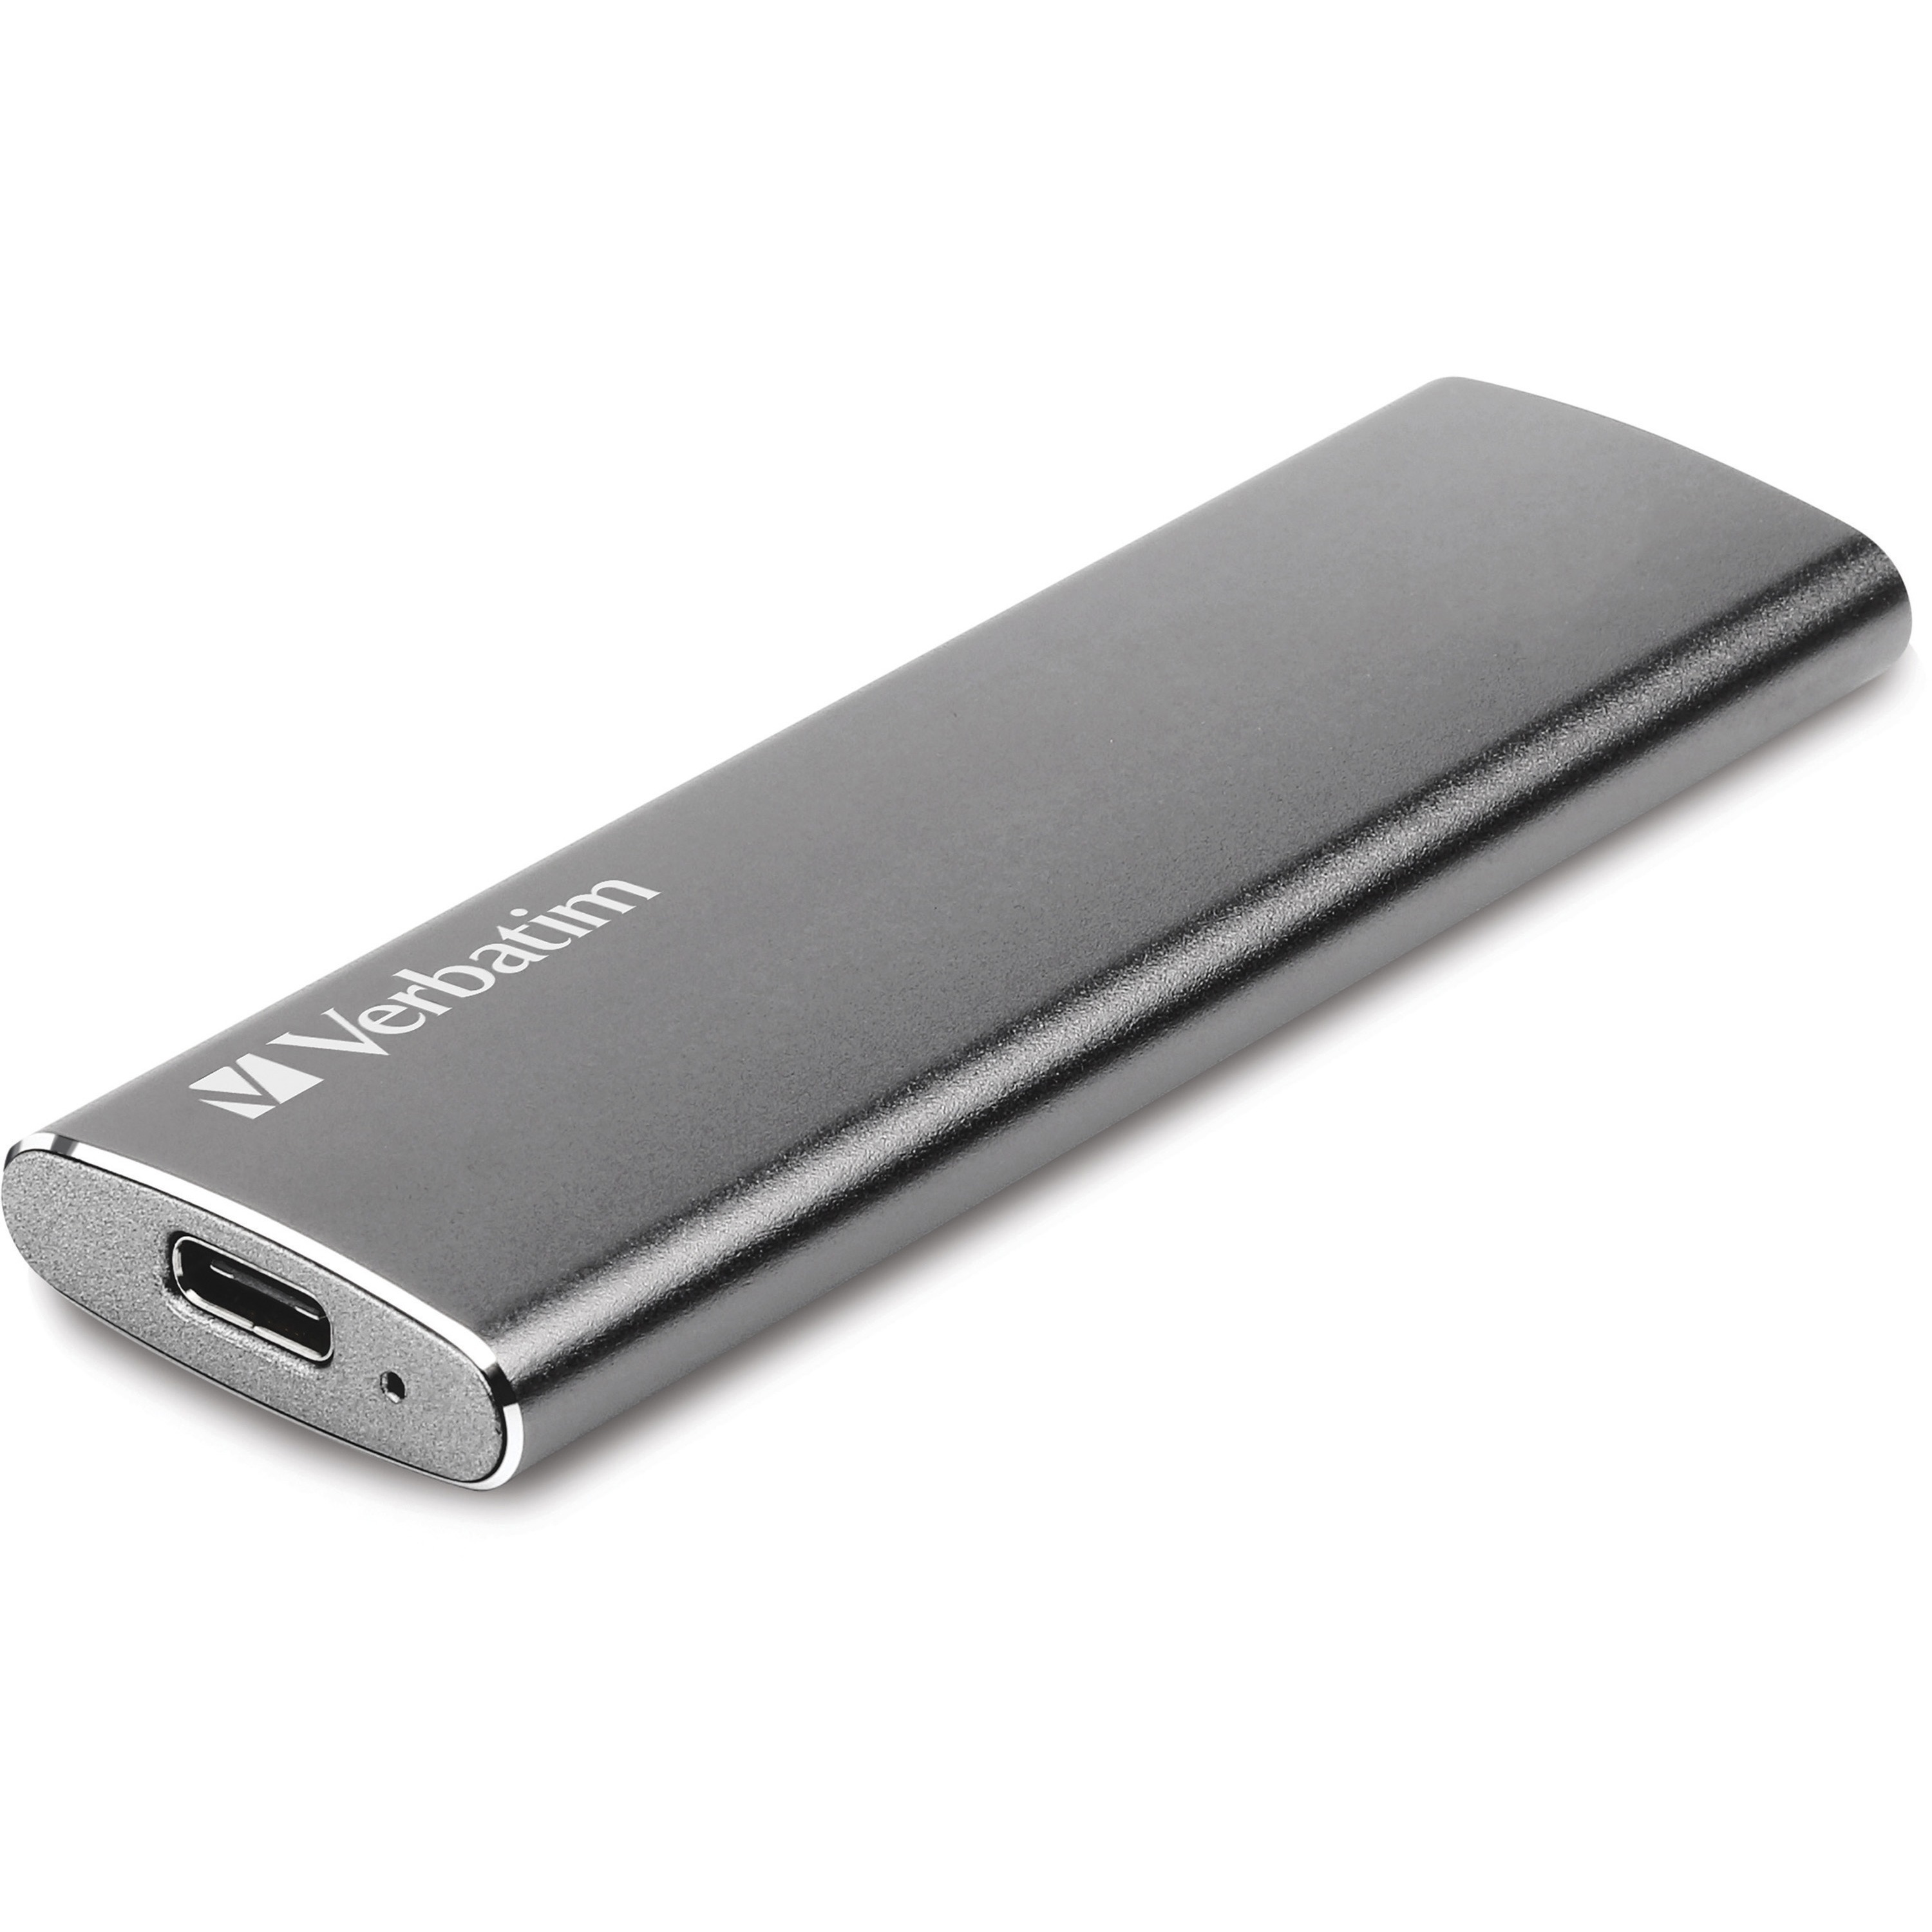 External - SSD, USB 2 Verbatim Graphite 3.1 Zerbee - Gen 480GB Vx500